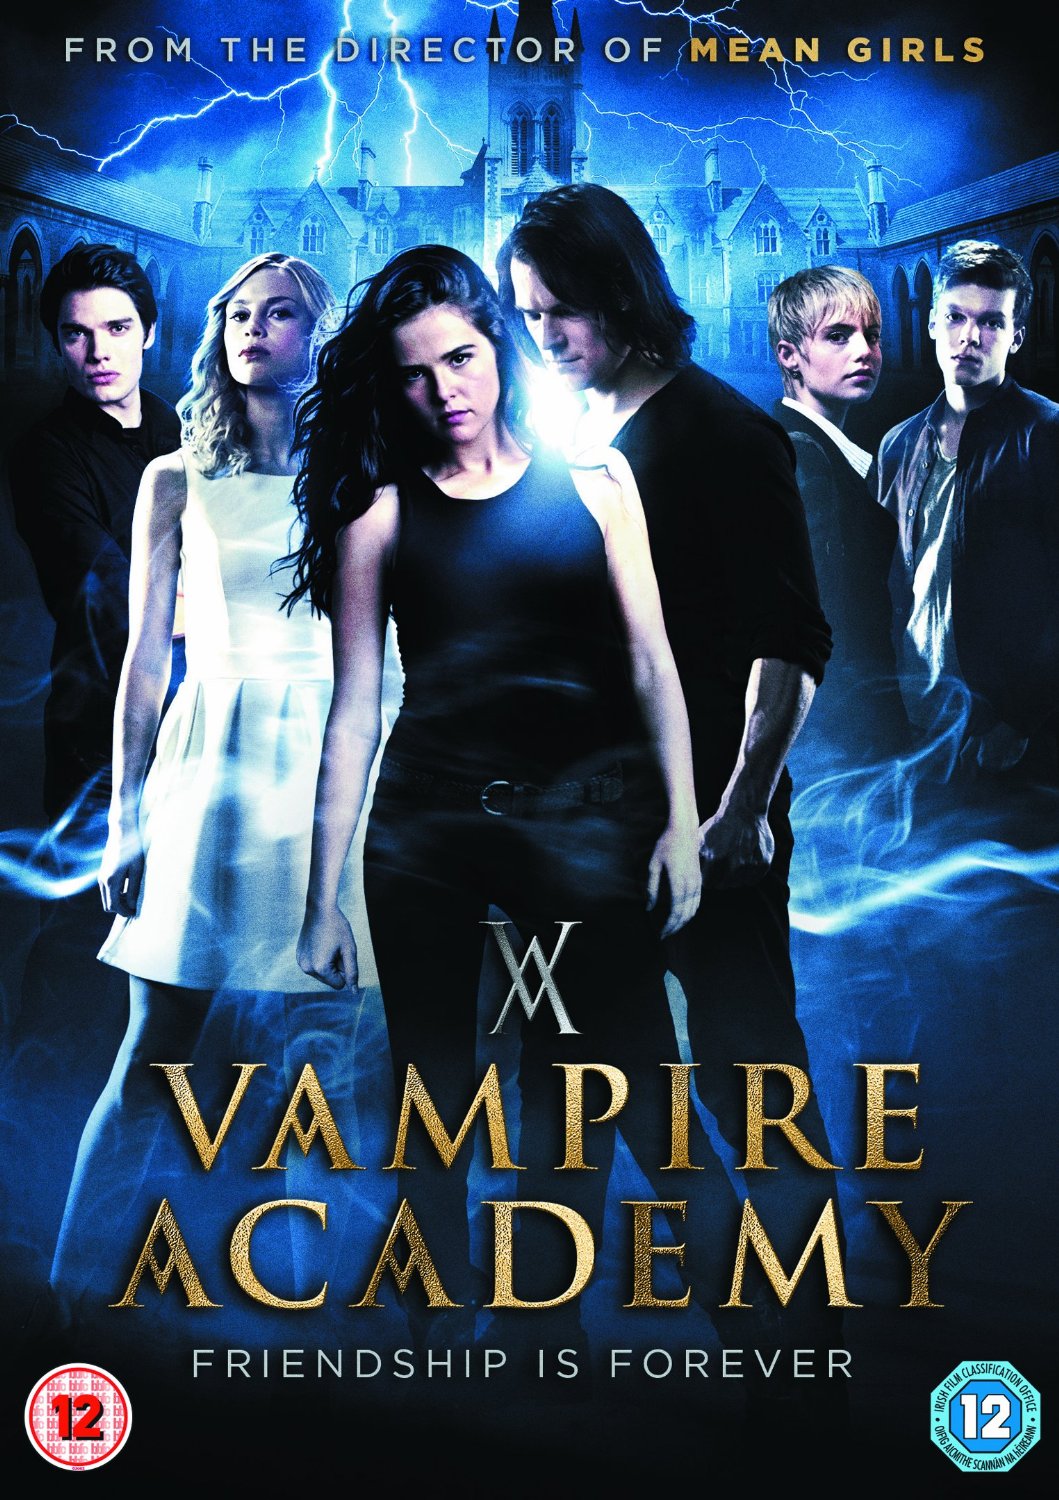 vampire academy 2 full movie free download torrent cz